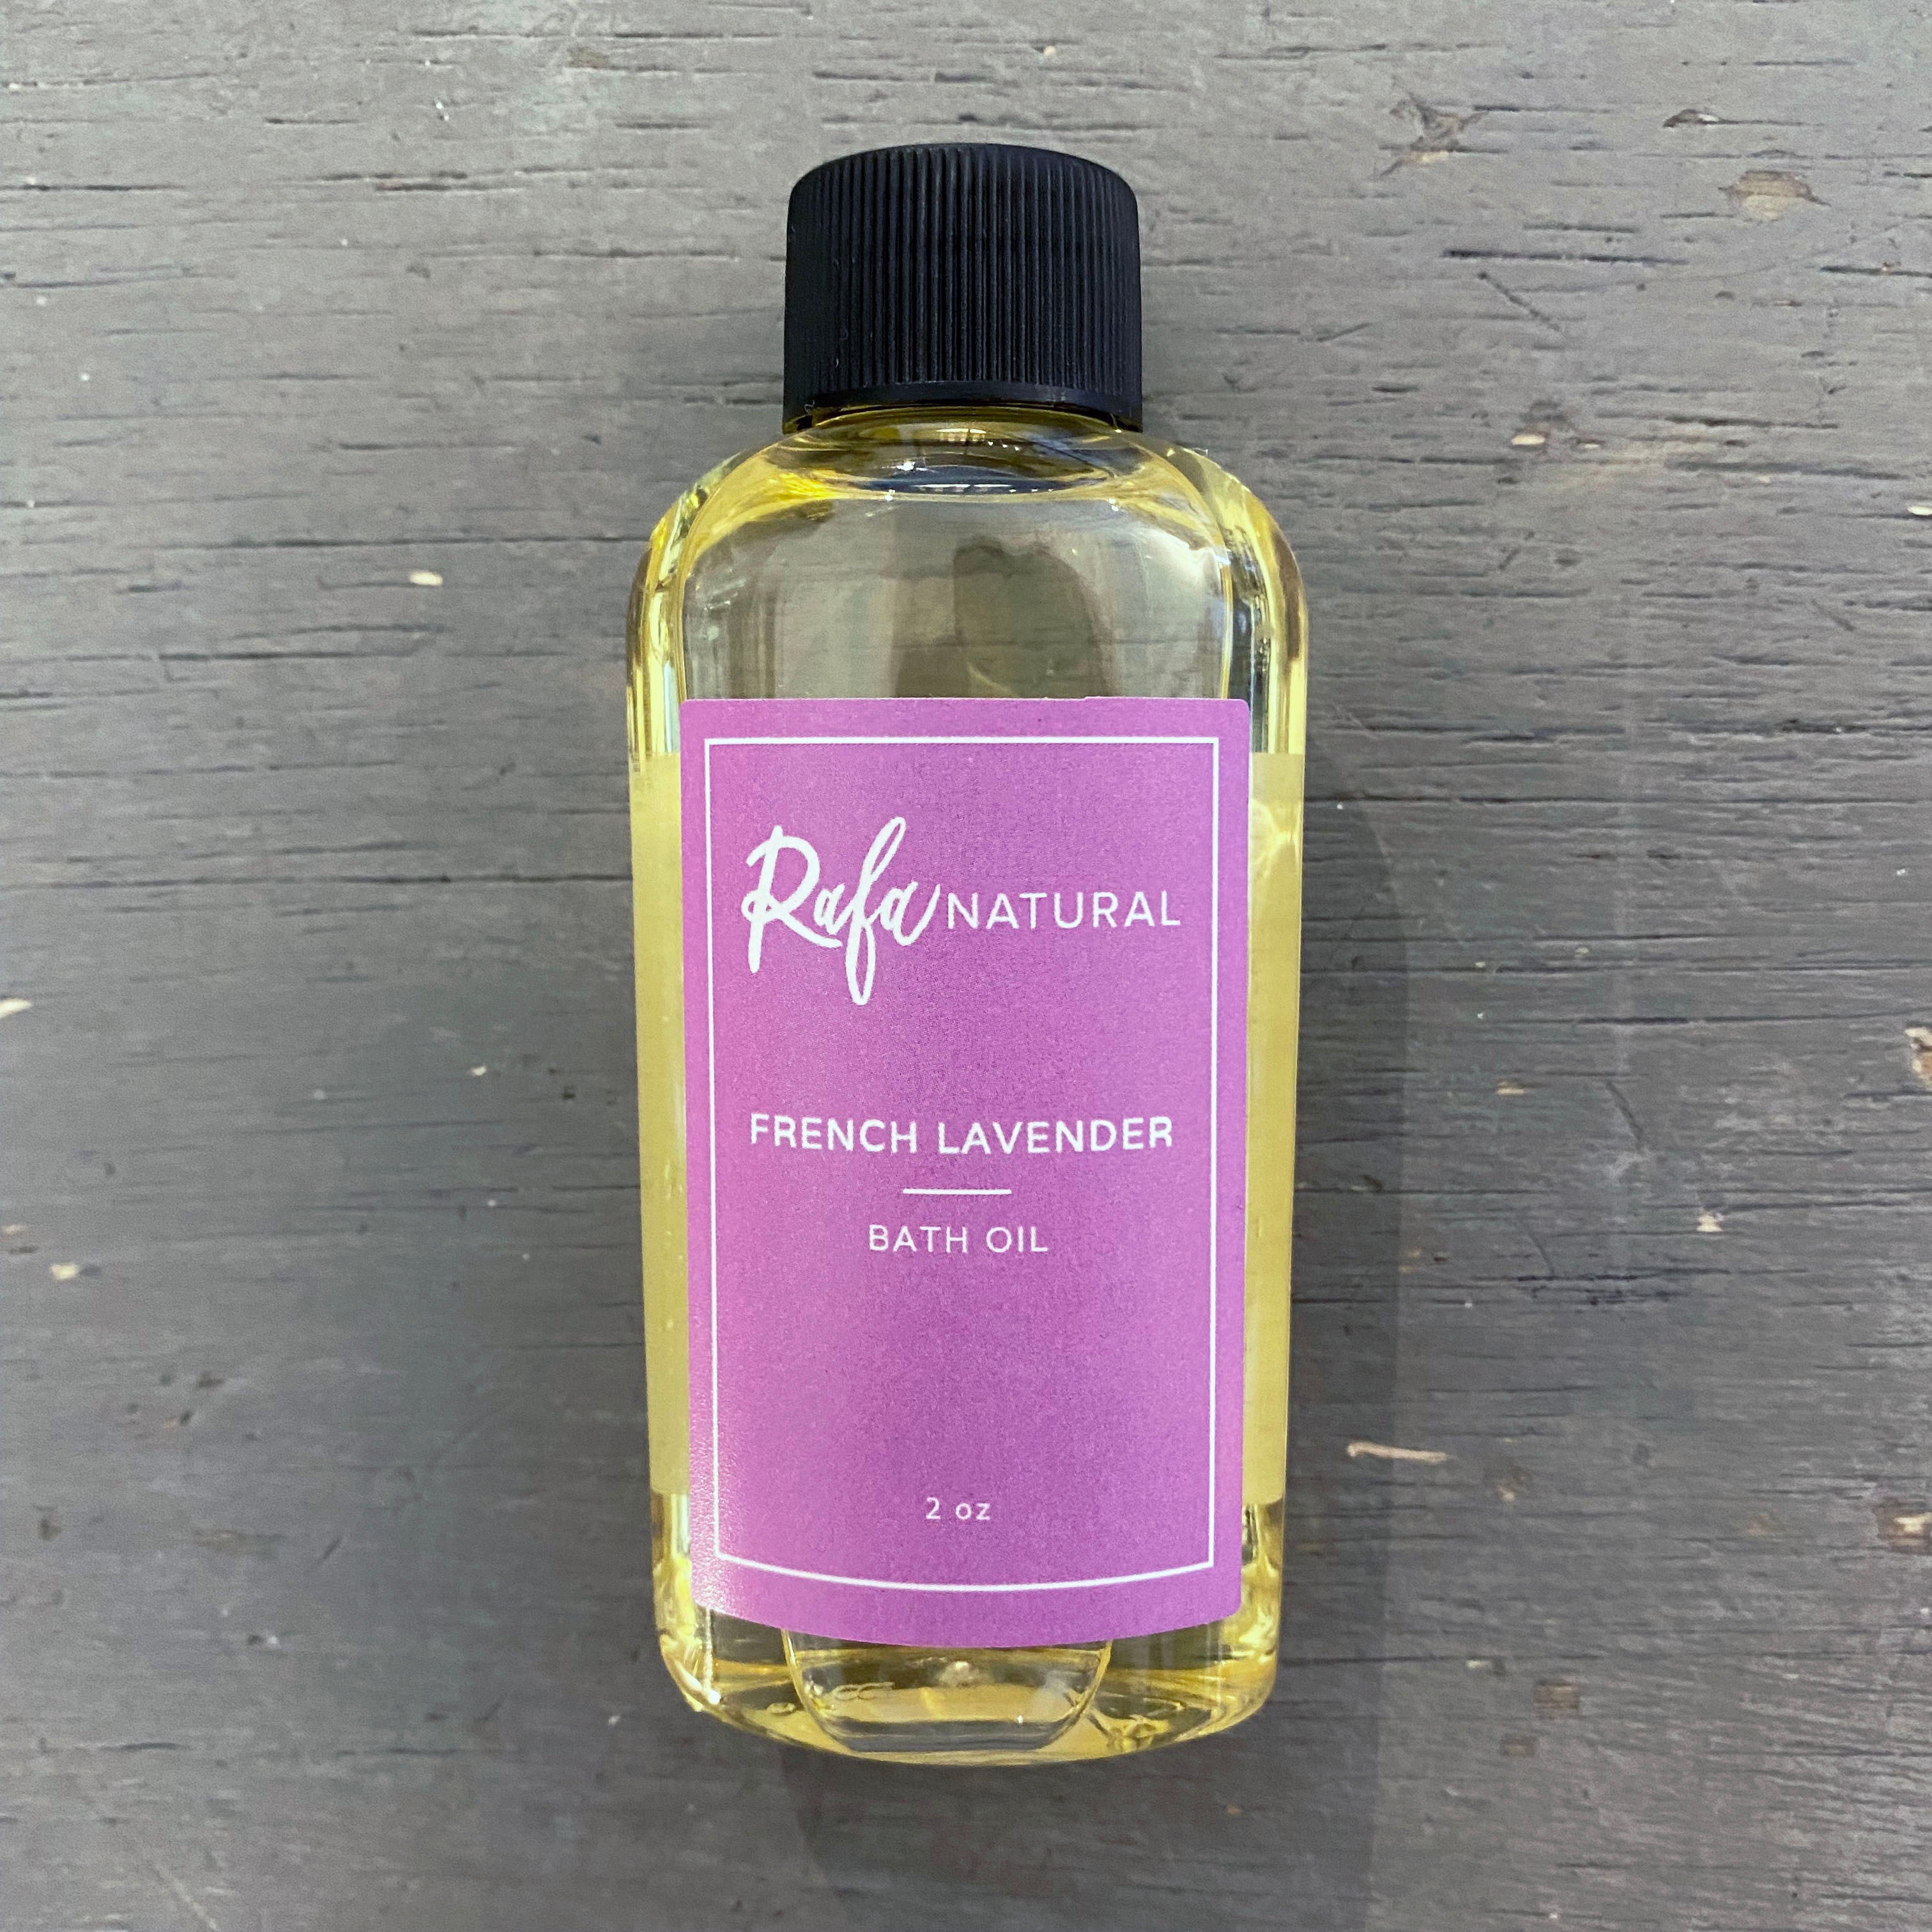 2oz. Travel French Lavender Bath Oil by Rafa Natural